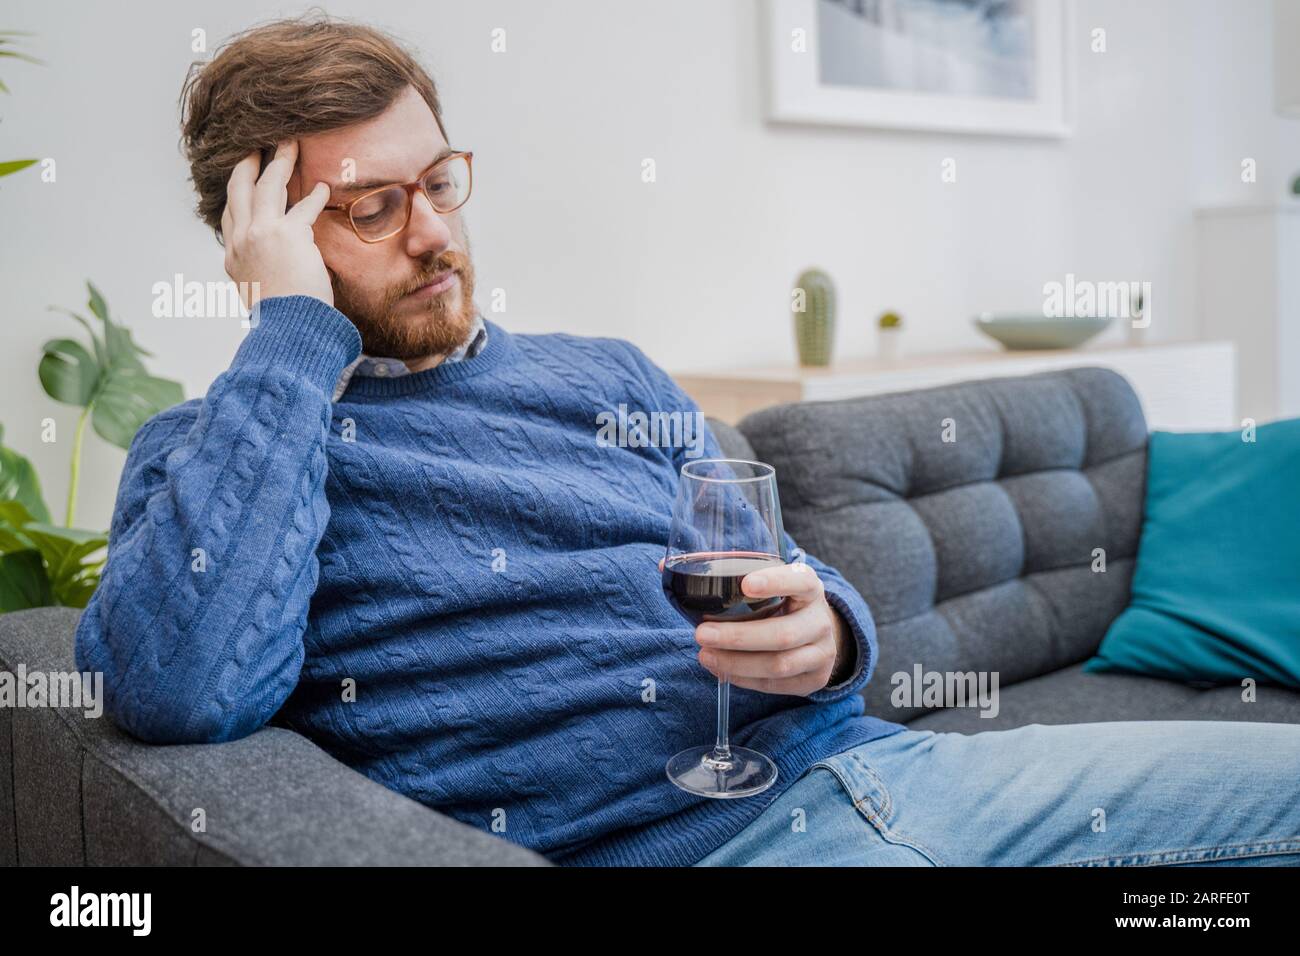 Sad depressed addicted drunk guy having problem Stock Photo